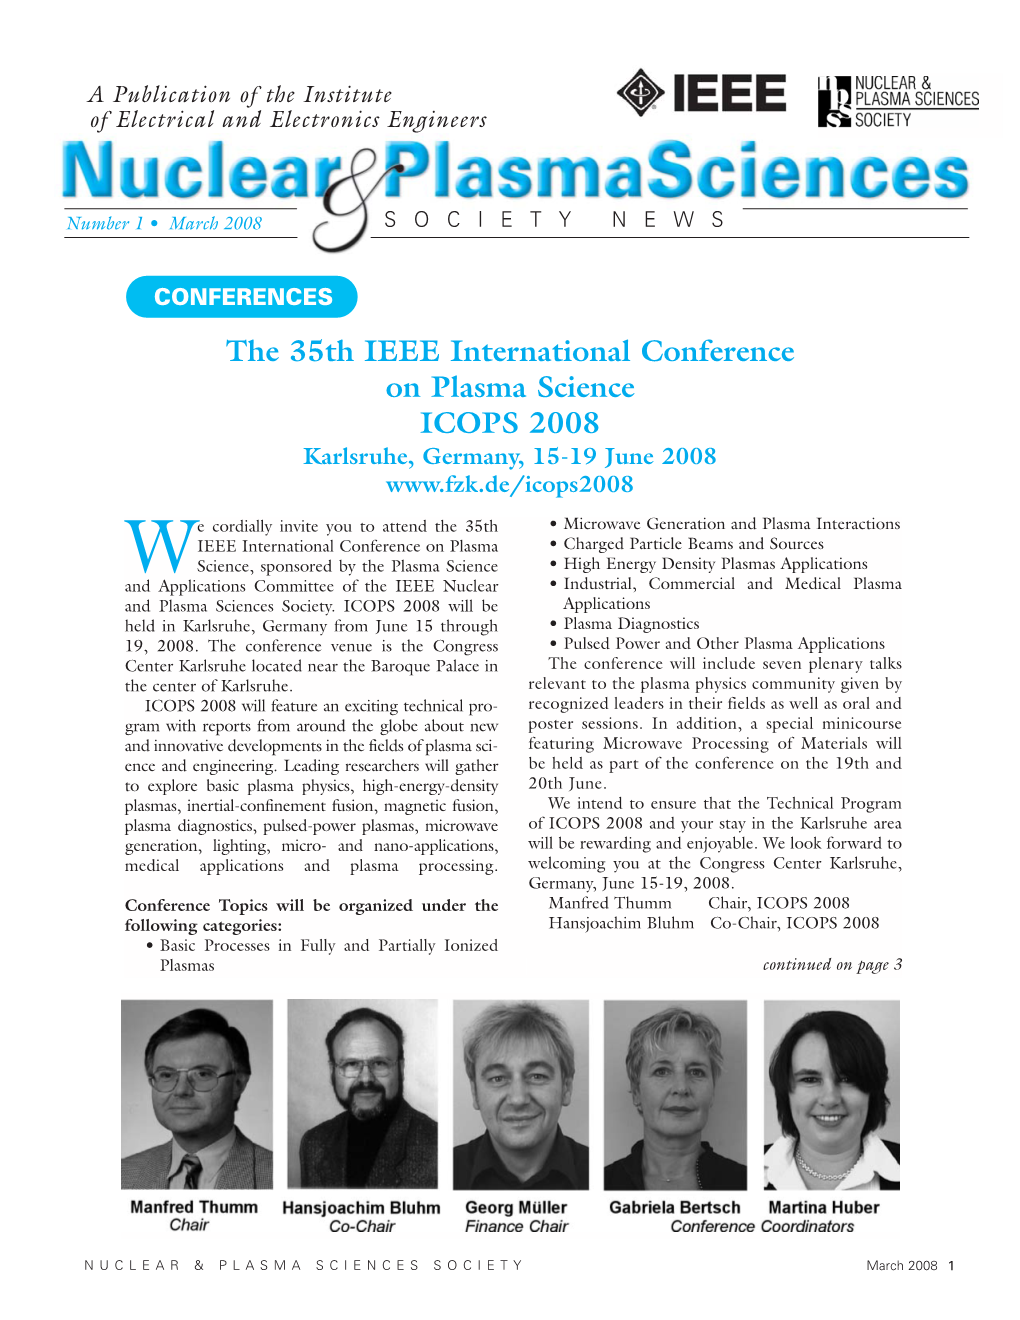 The 35Th IEEE International Conference on Plasma Science ICOPS 2008 Karlsruhe, Germany, 15-19 June 2008